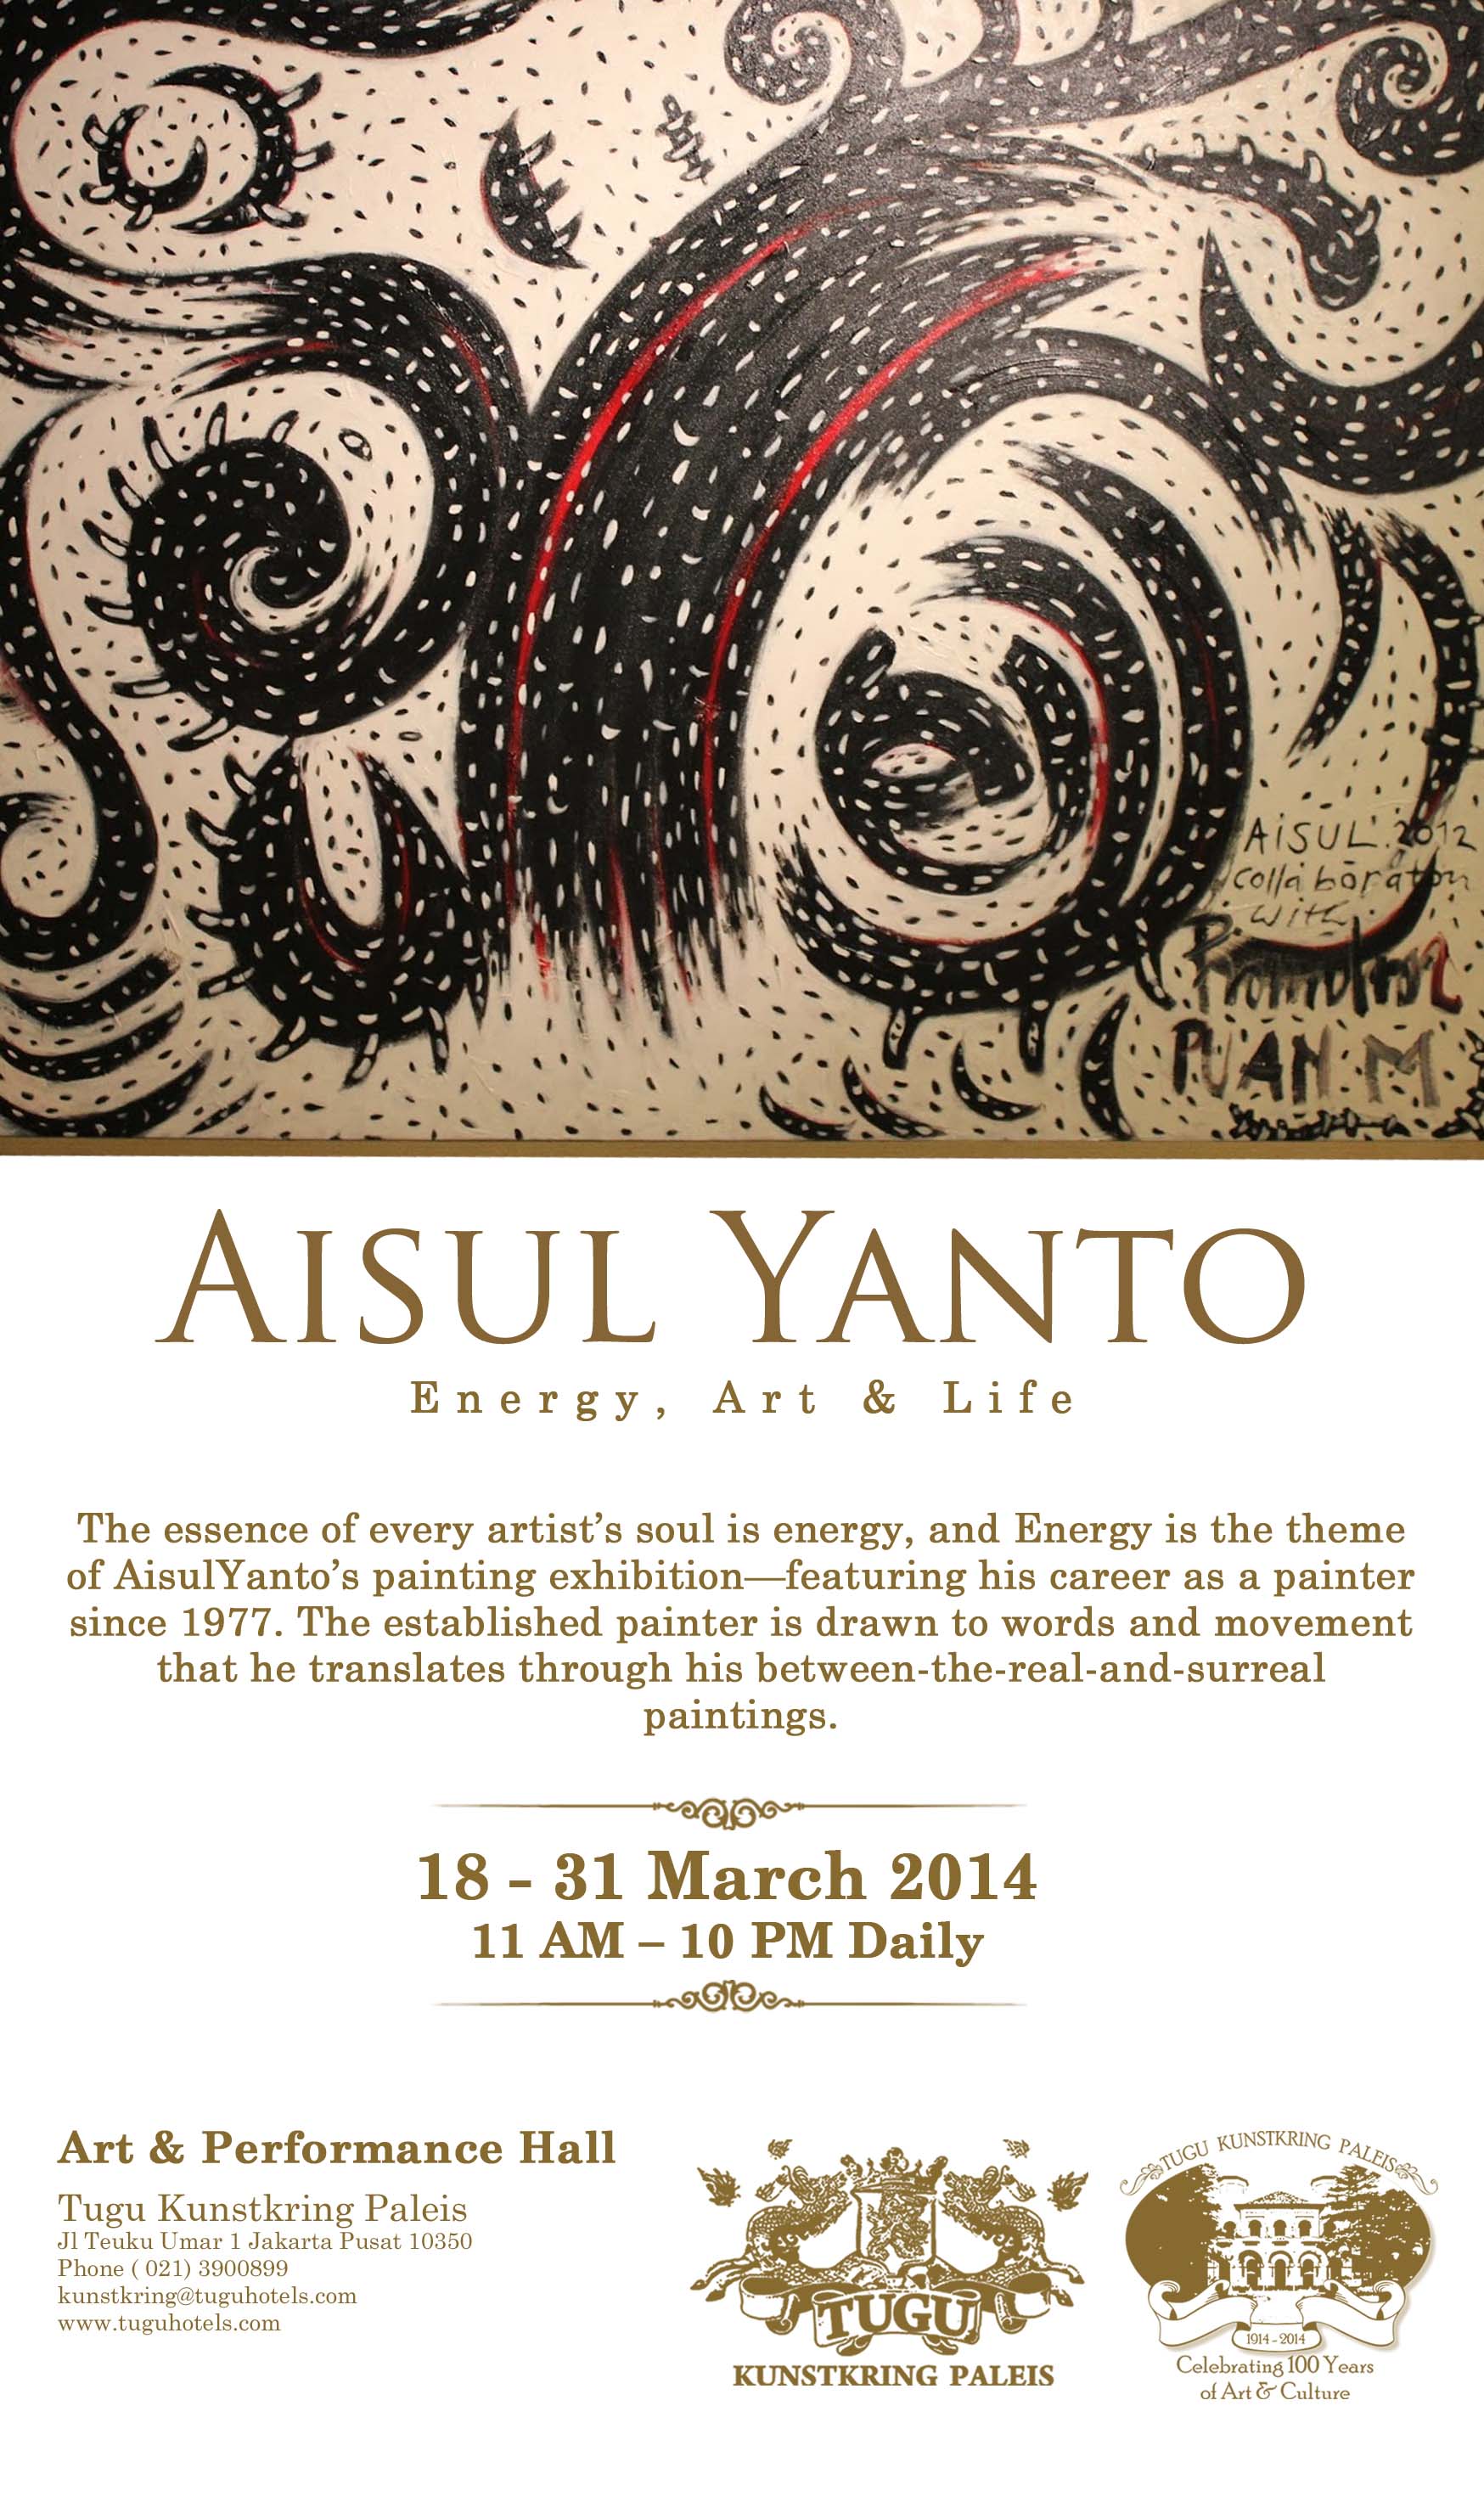 aisul yanto - energy, art and life at tugu kunstkring paleis